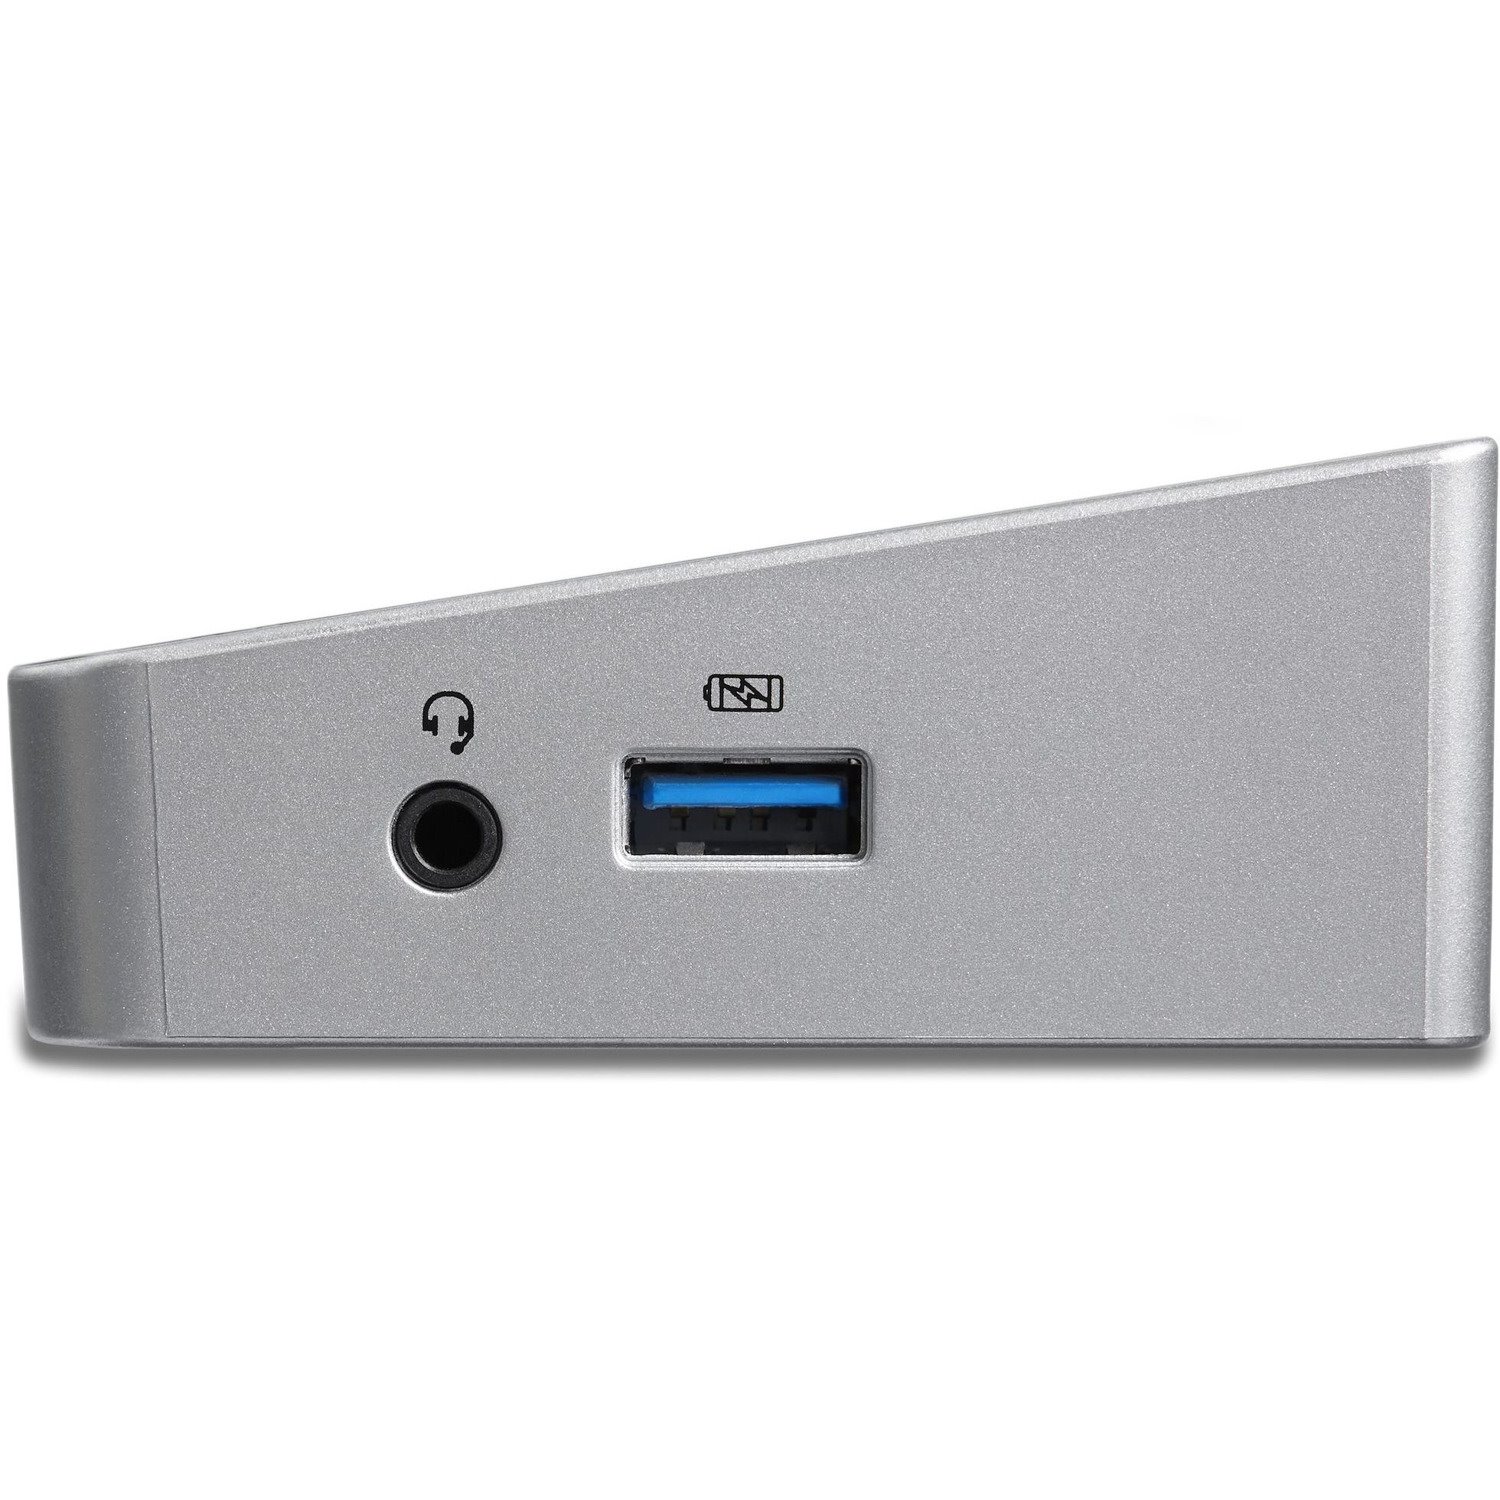 StarTech.com USB-C Dock - 4K Triple Monitor USB Type-C Docking Station with Dual DisplayPort & HDMI - 100W Power Delivery - 5x USB 3.0 Hub